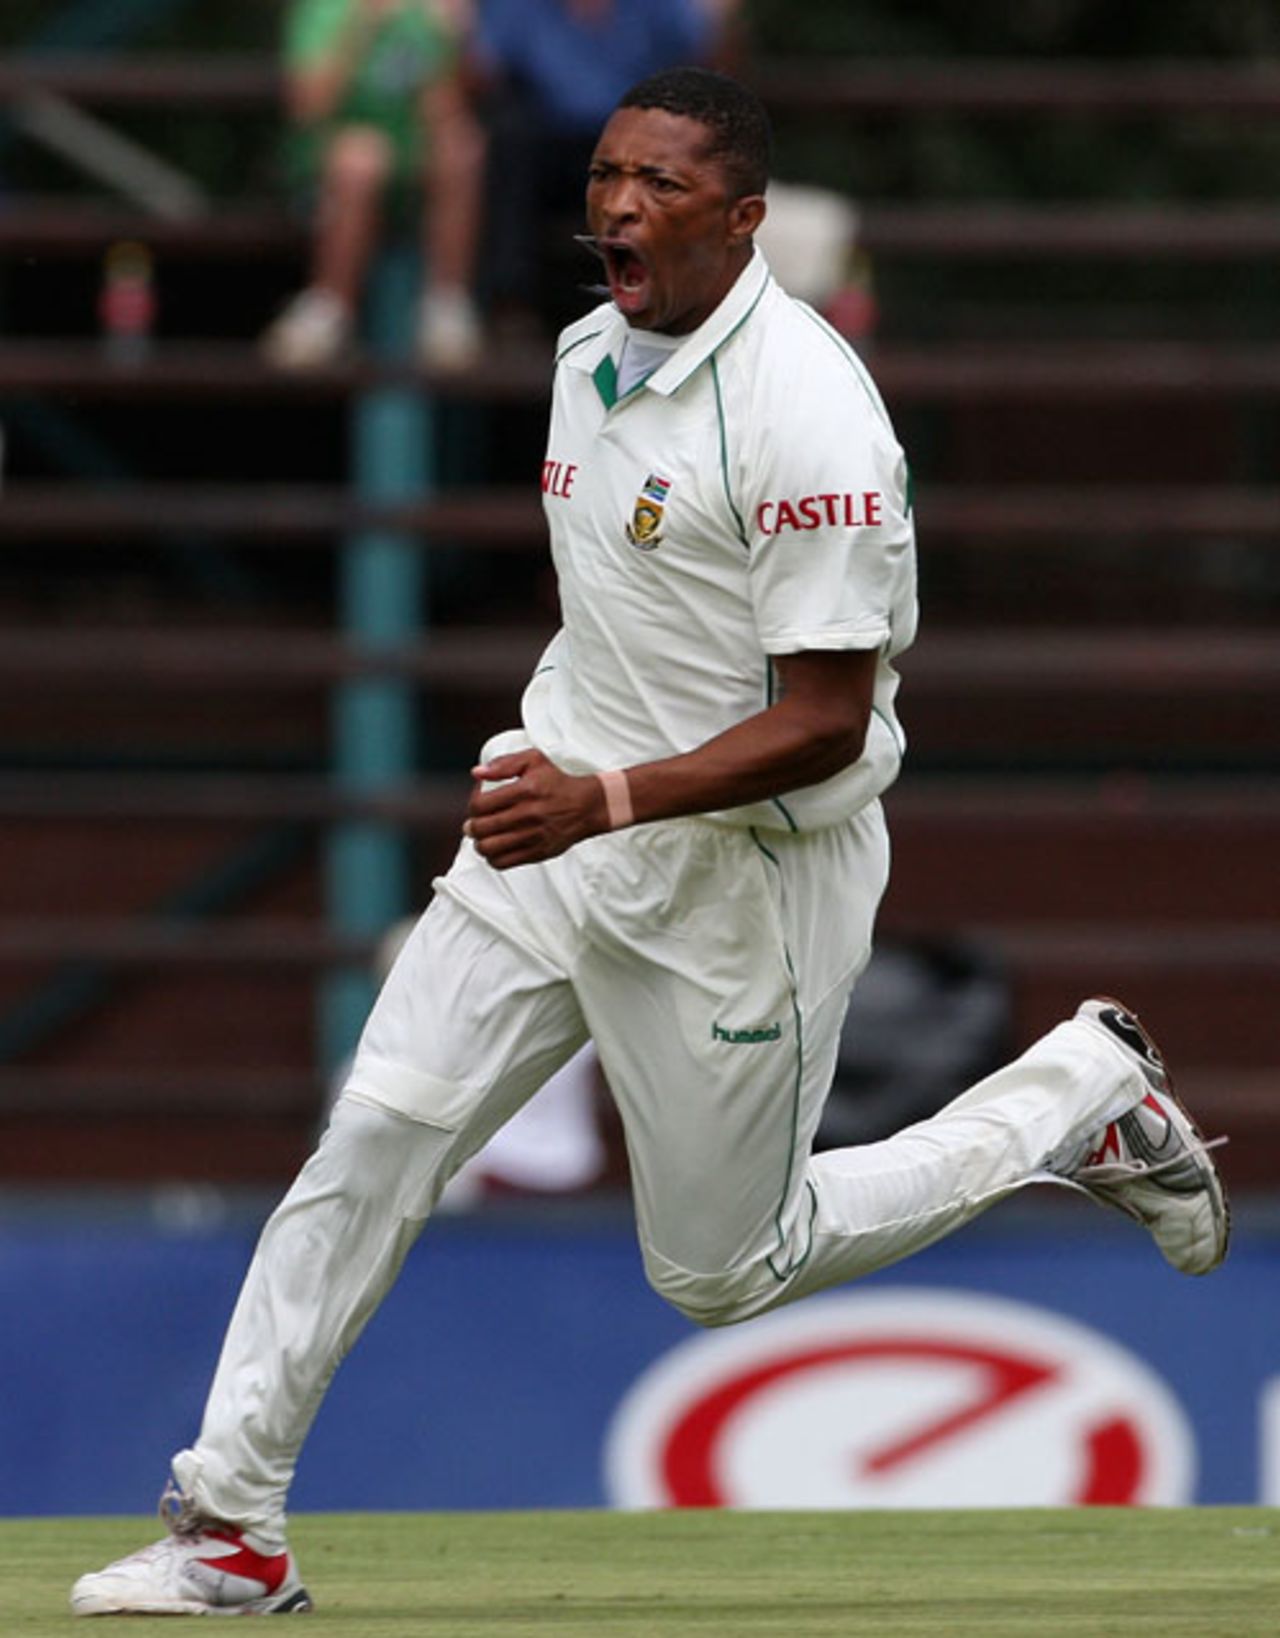 A jubilant Makhaya Ntini after dismissing Ricky Ponting, South Africa v Australia, 1st Test, Johannesburg, 1st day, February 26, 2009